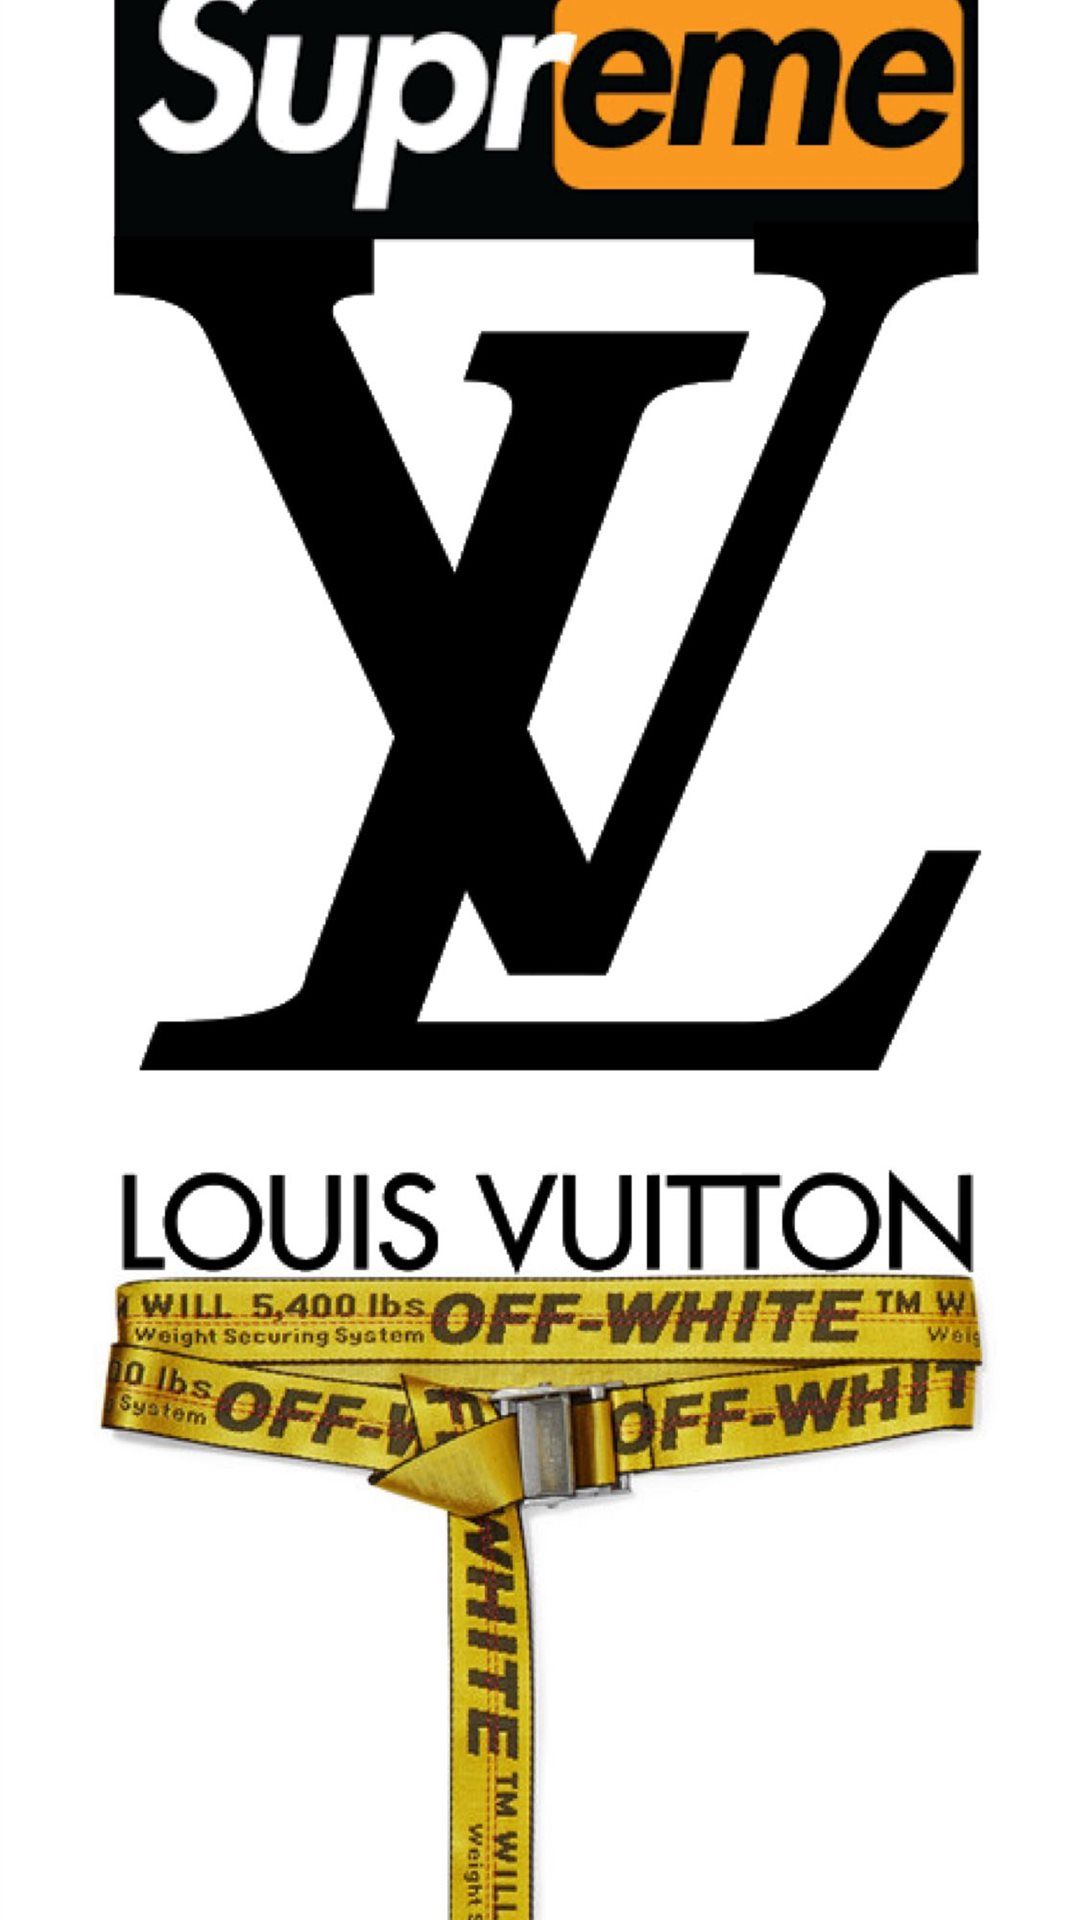 Louis Vuitton off white wallpaper iPhone 8 Wallpaper Free Download